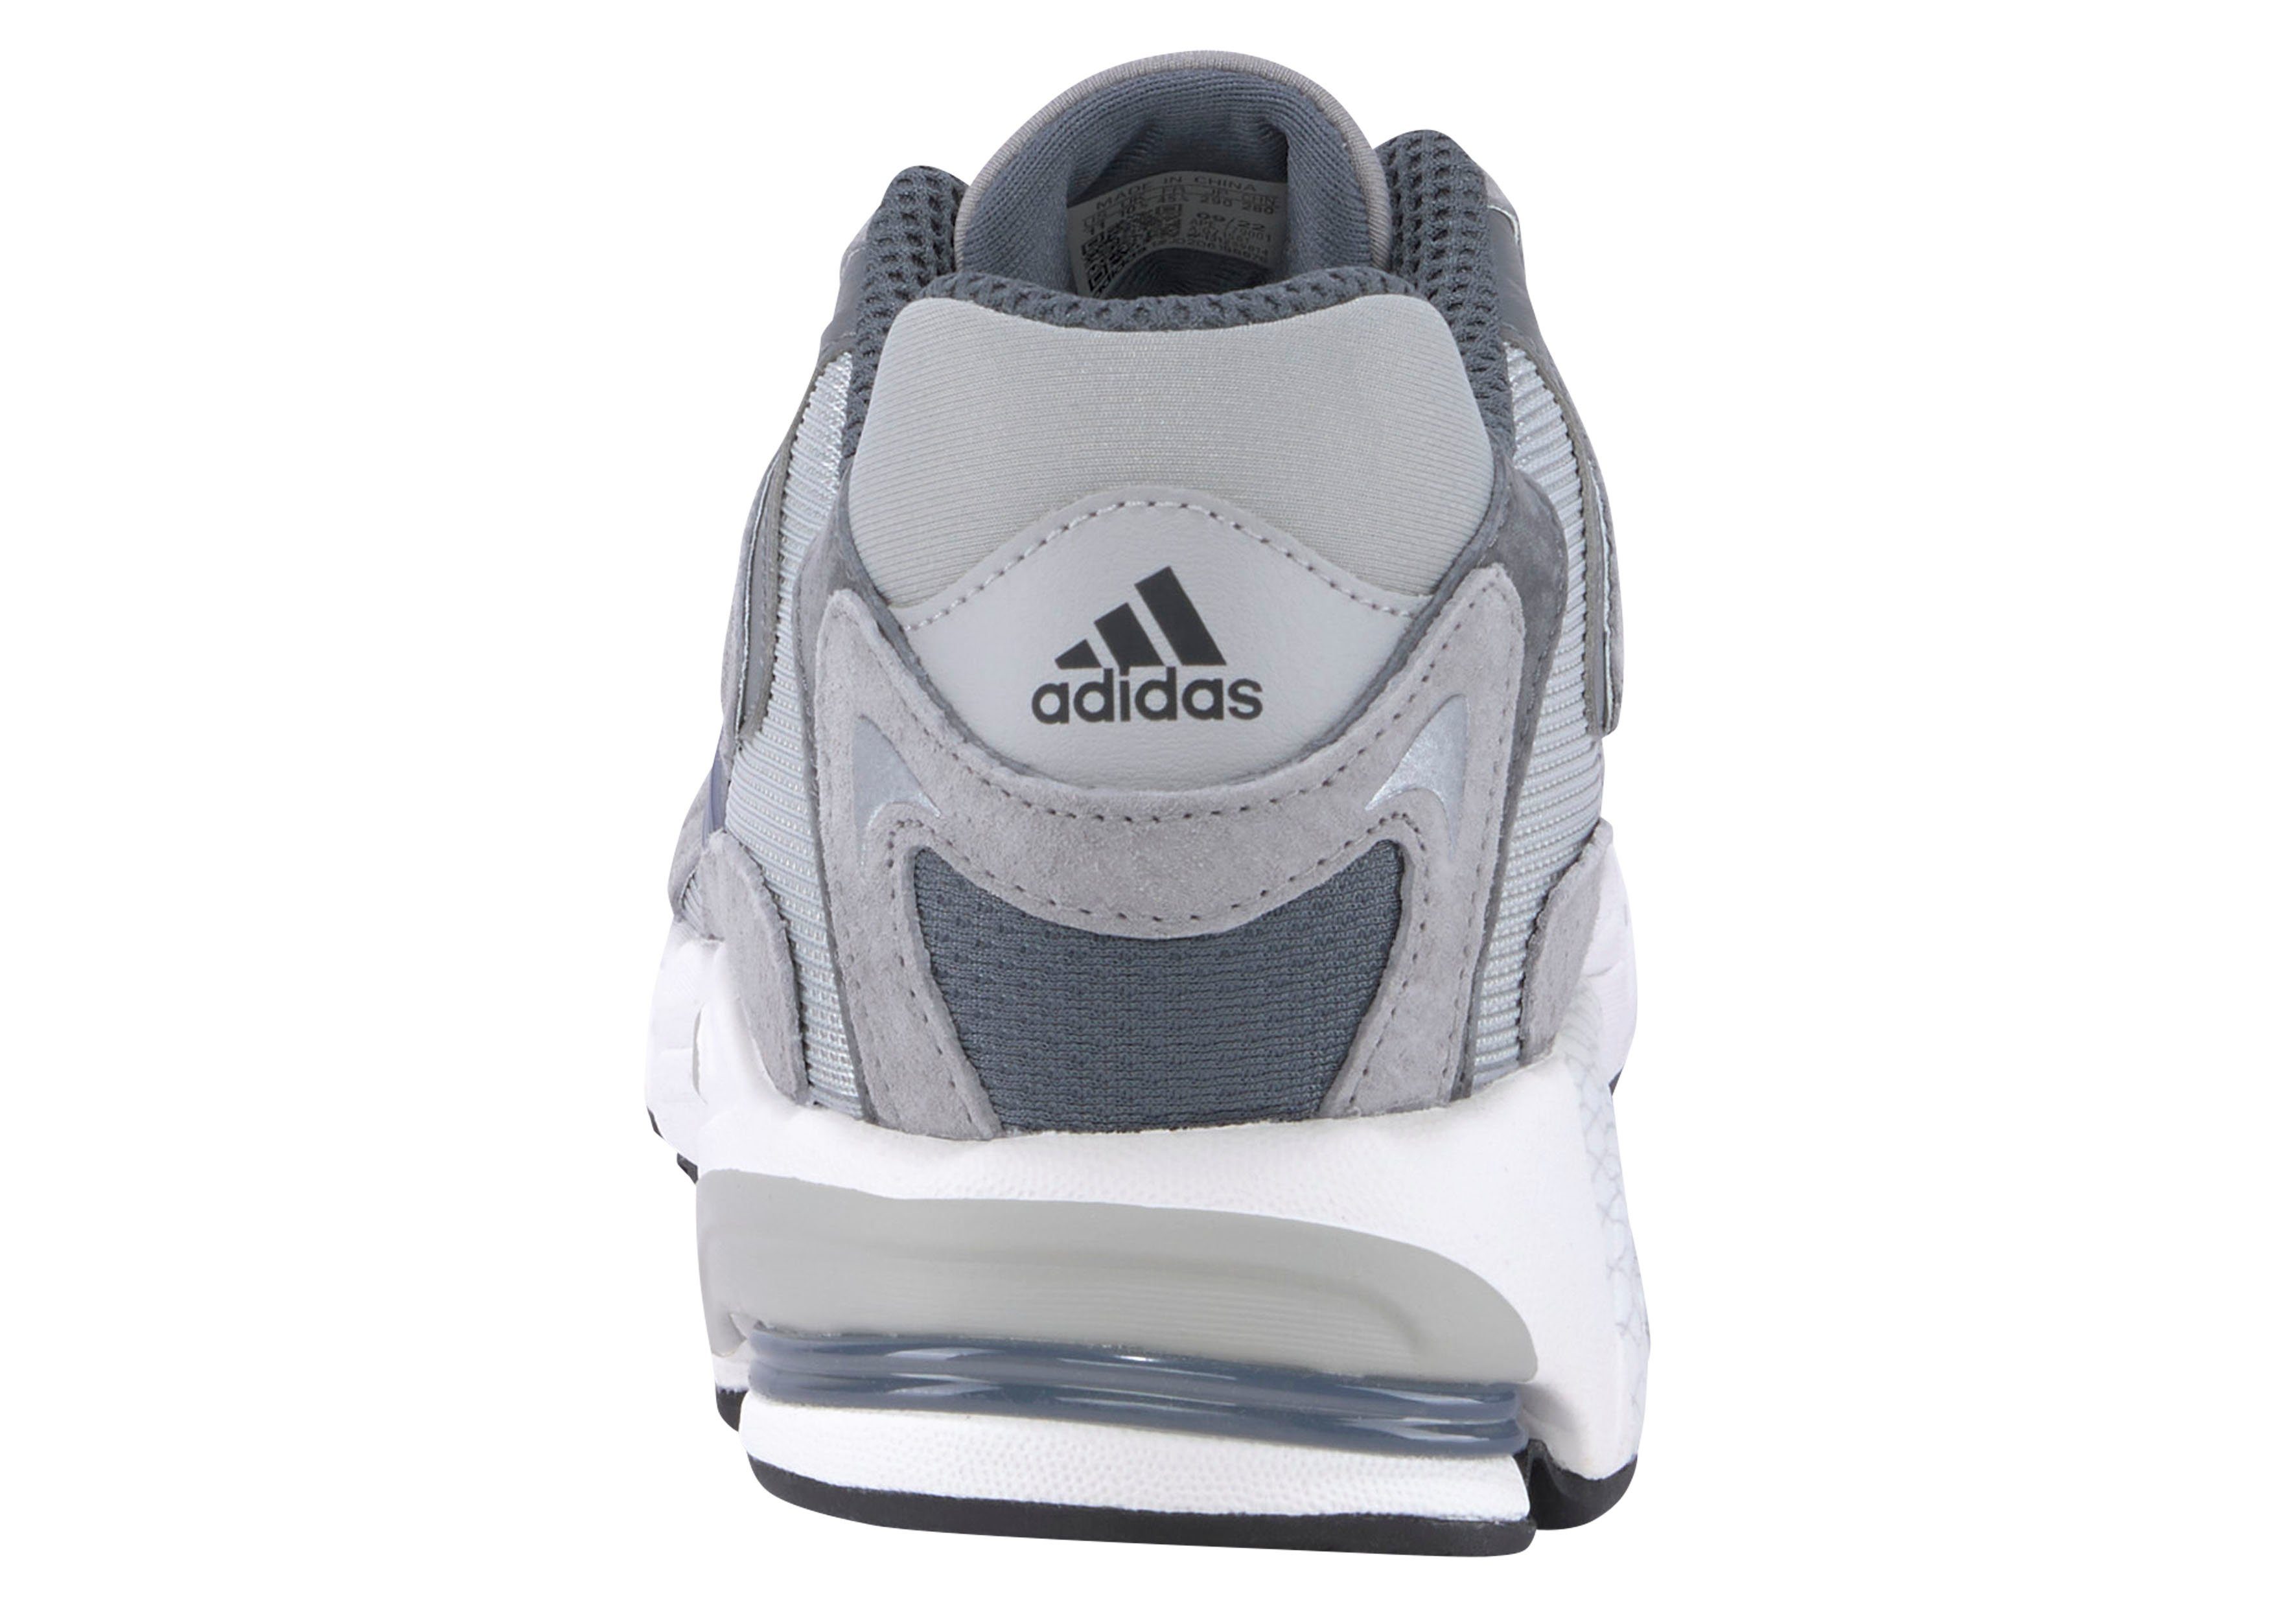 adidas Originals RESPONSE CL Grey / Sneaker White Grey Four / Metallicl Crystal